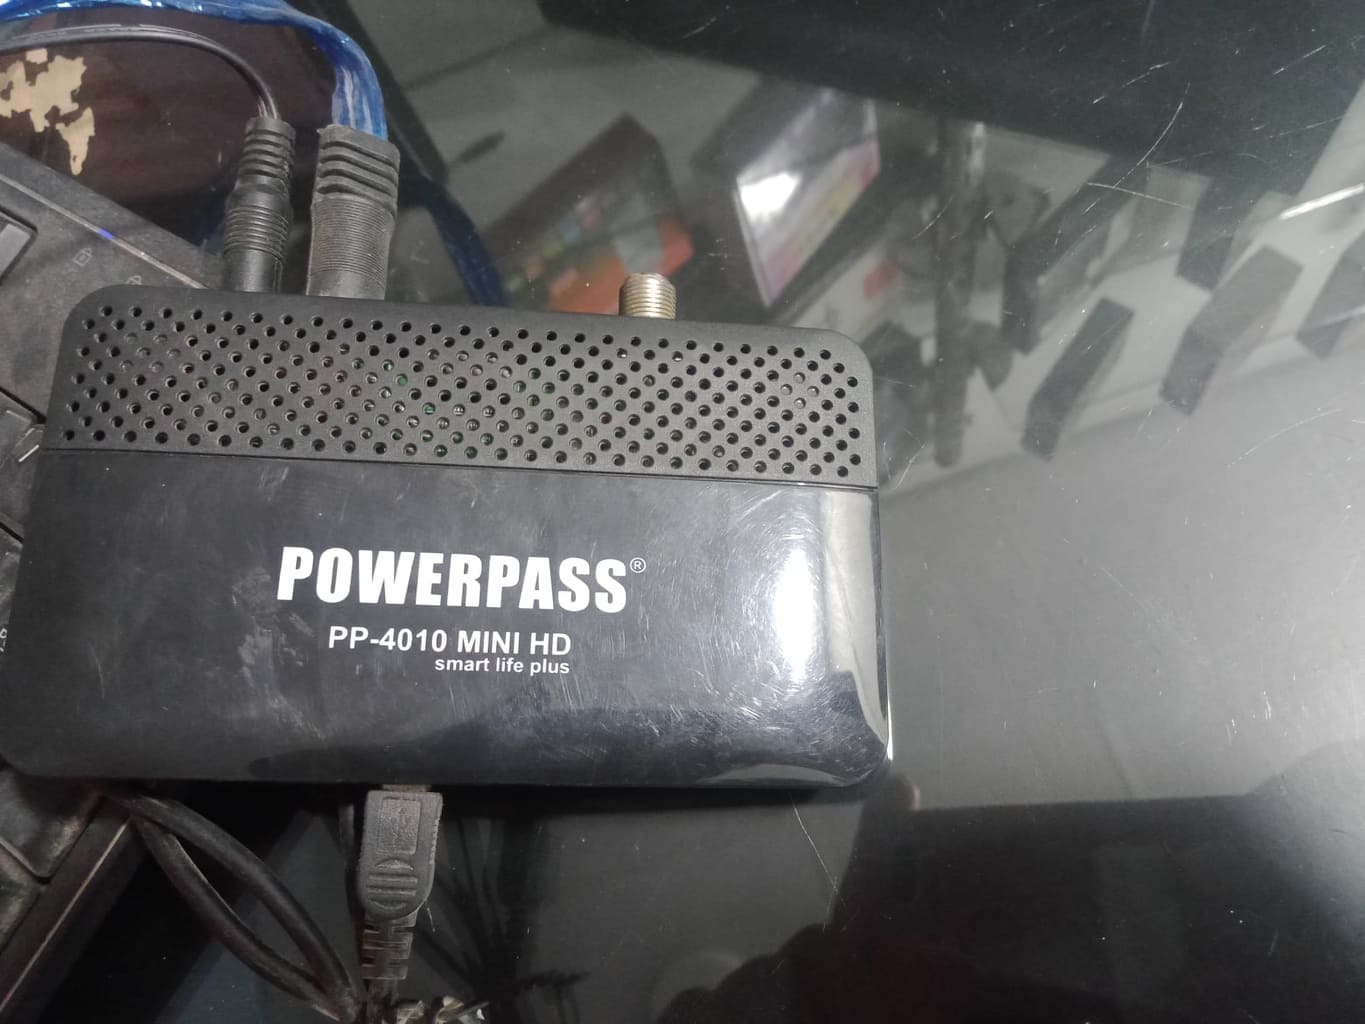 حصريا فلاشة اصليه مسحوبه لرسيفر powerpass pp-4010 mini hd smart life plus معالج مونتاج P_2104kpue01